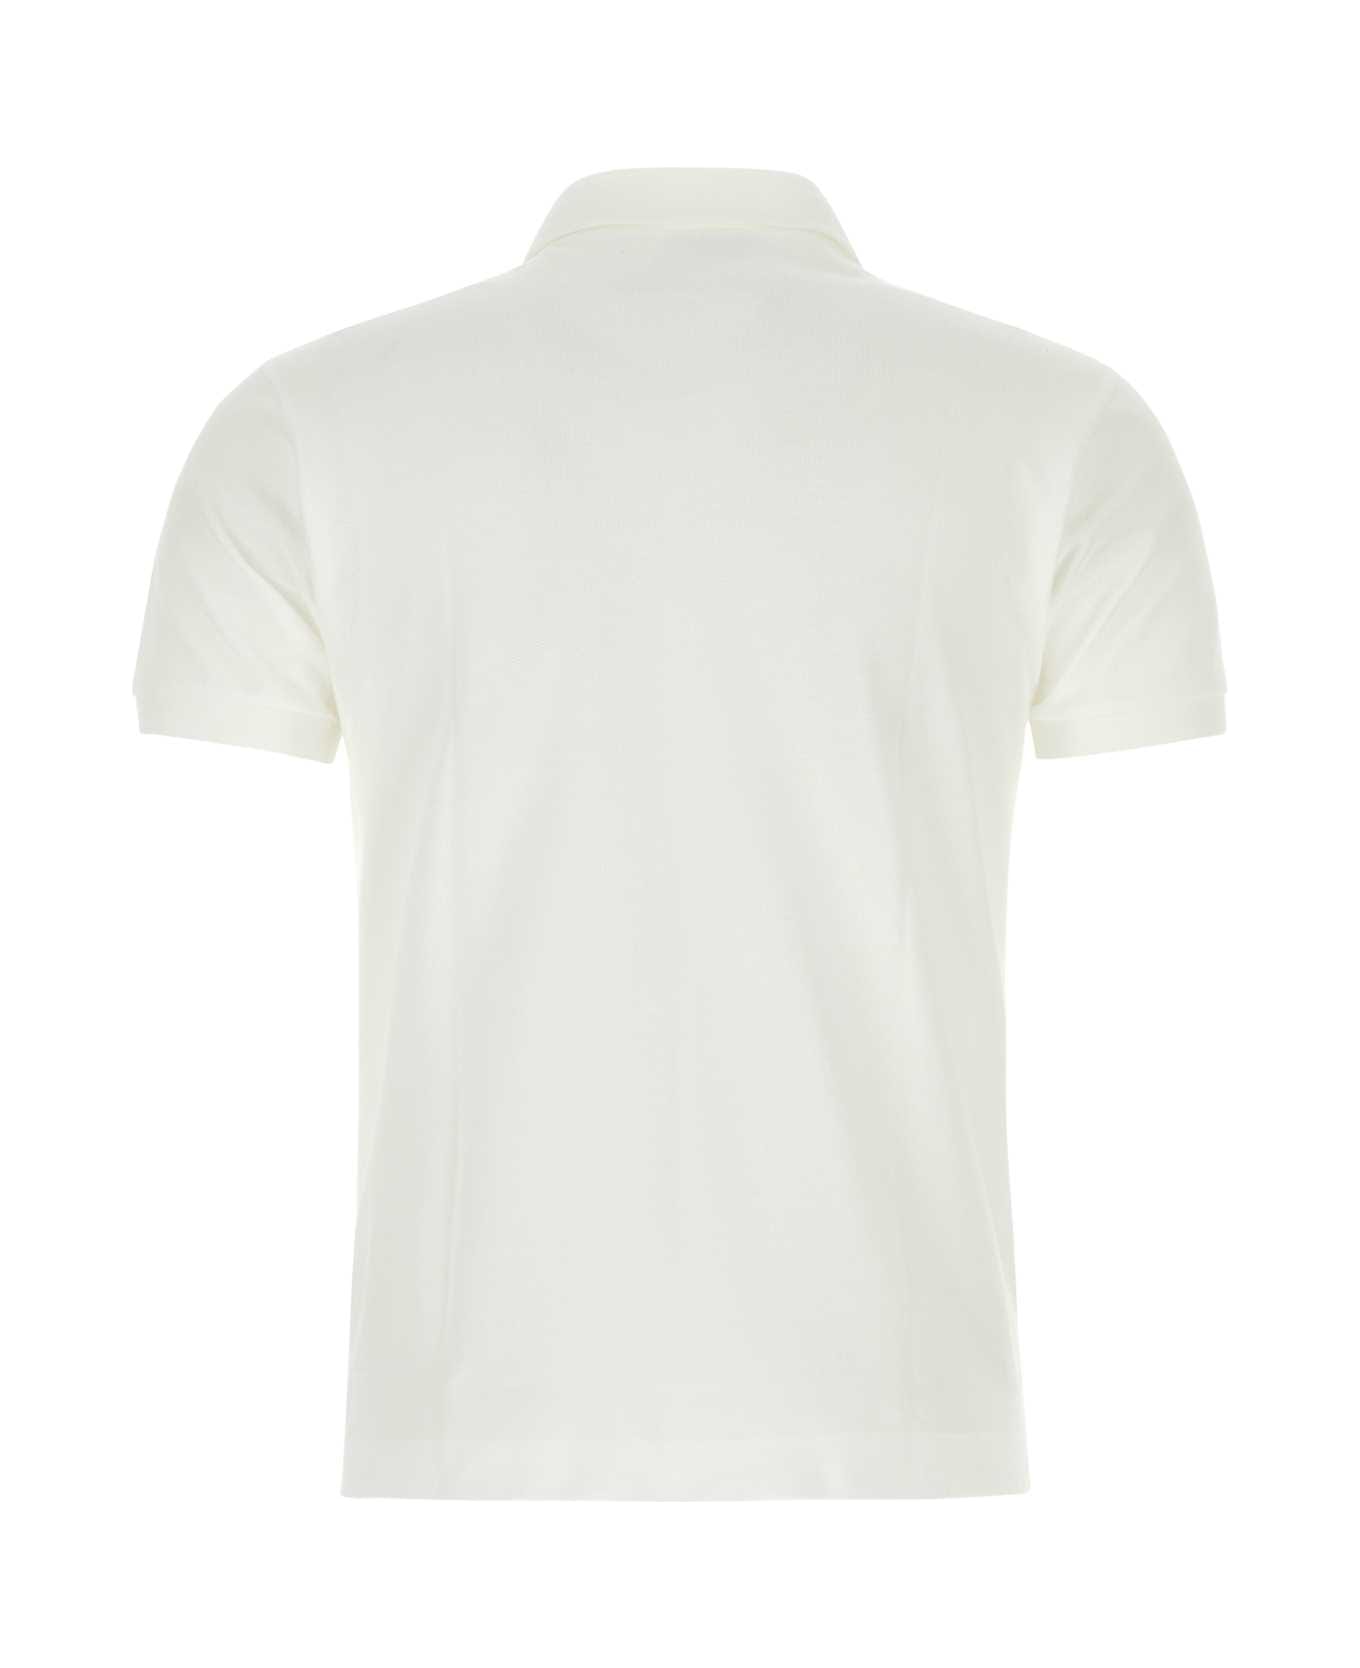 Lacoste White Piquet Polo Shirt - 001